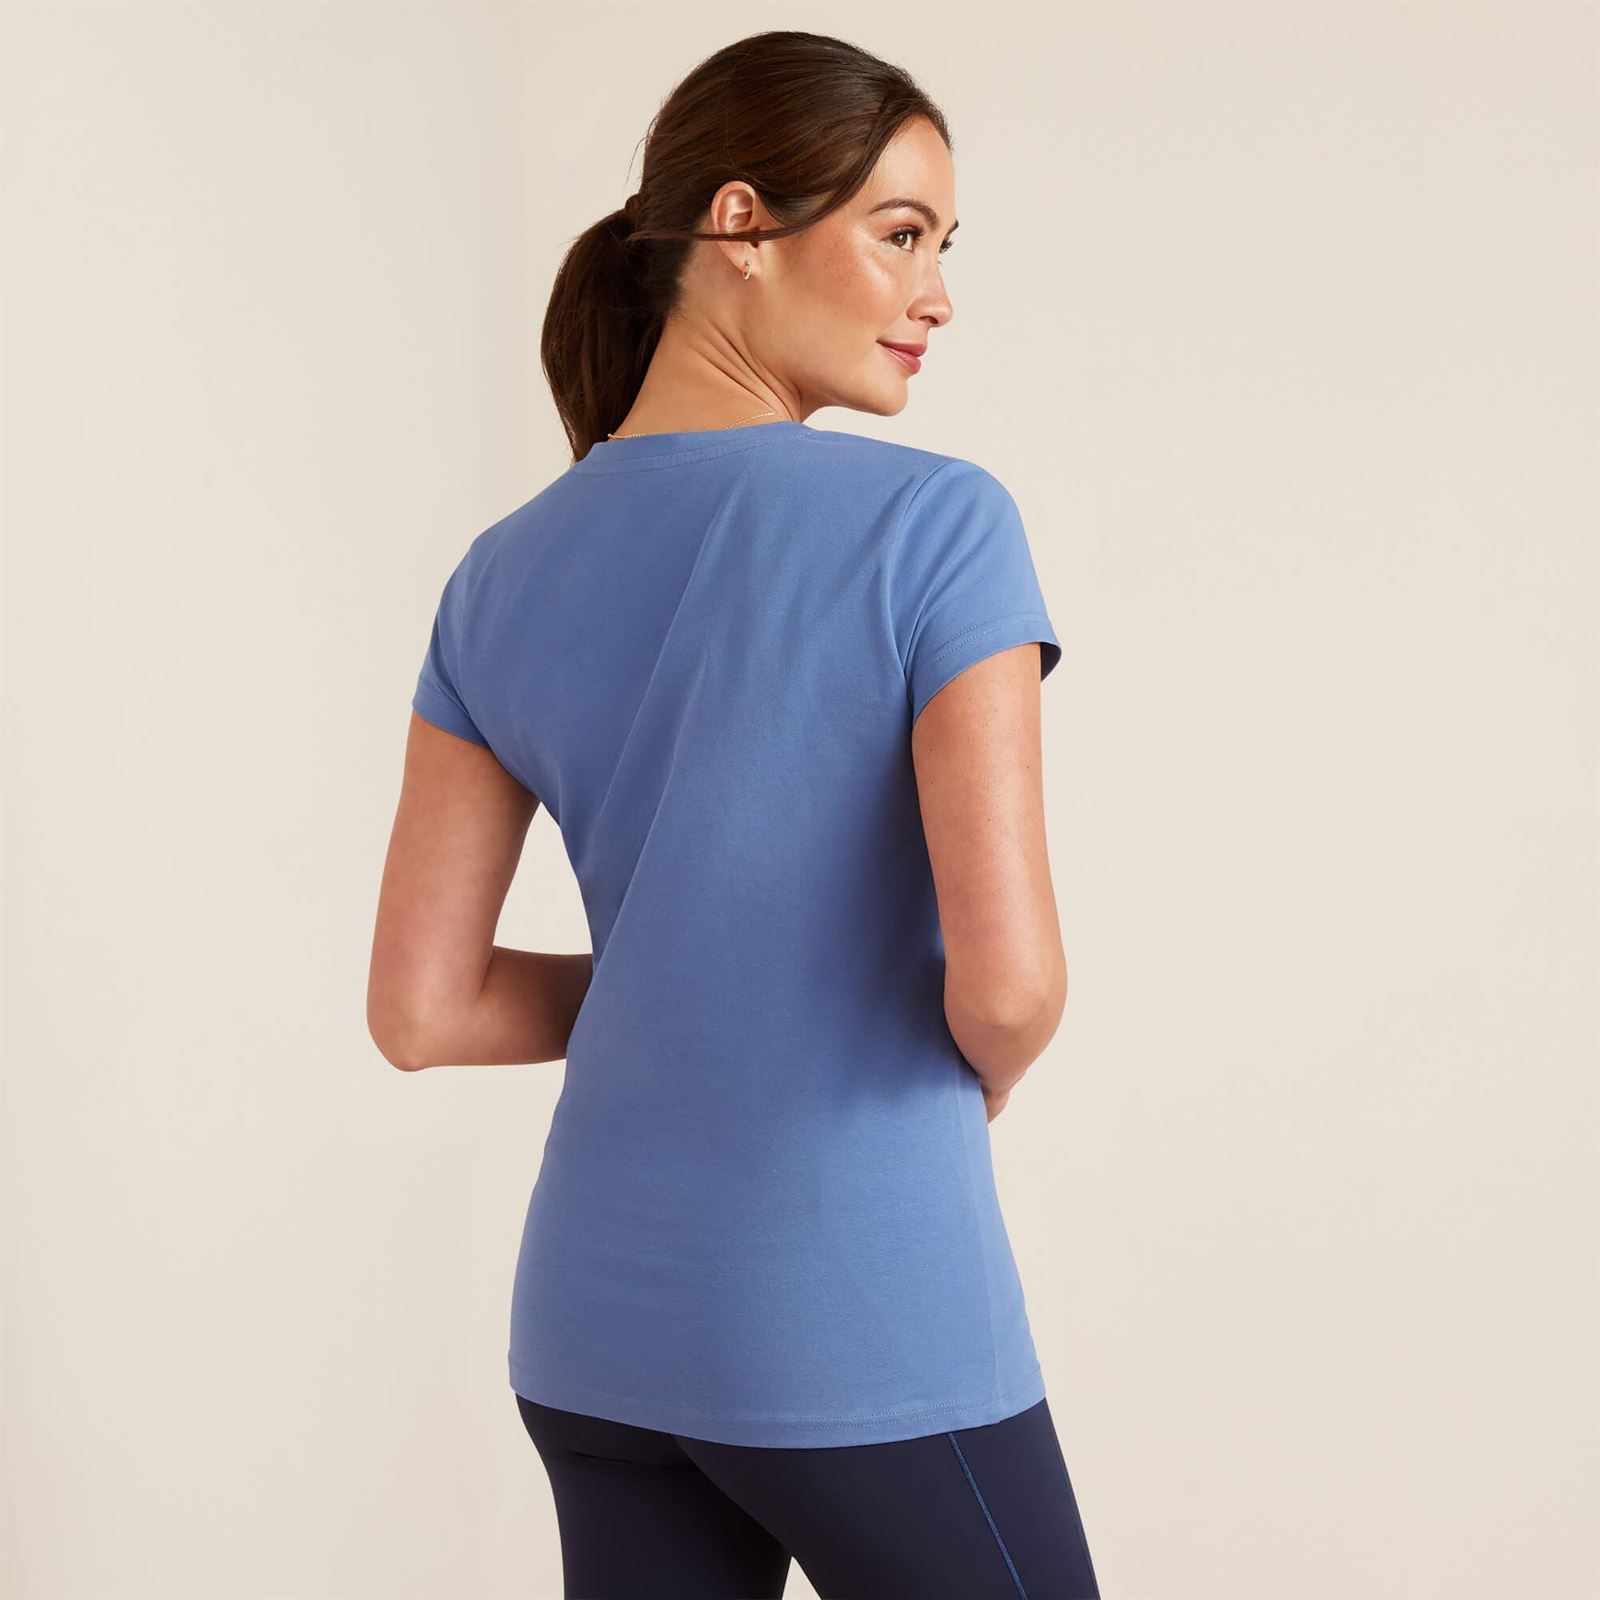 Camiseta ARIAT mujer azul logo vertical - Imagen 2